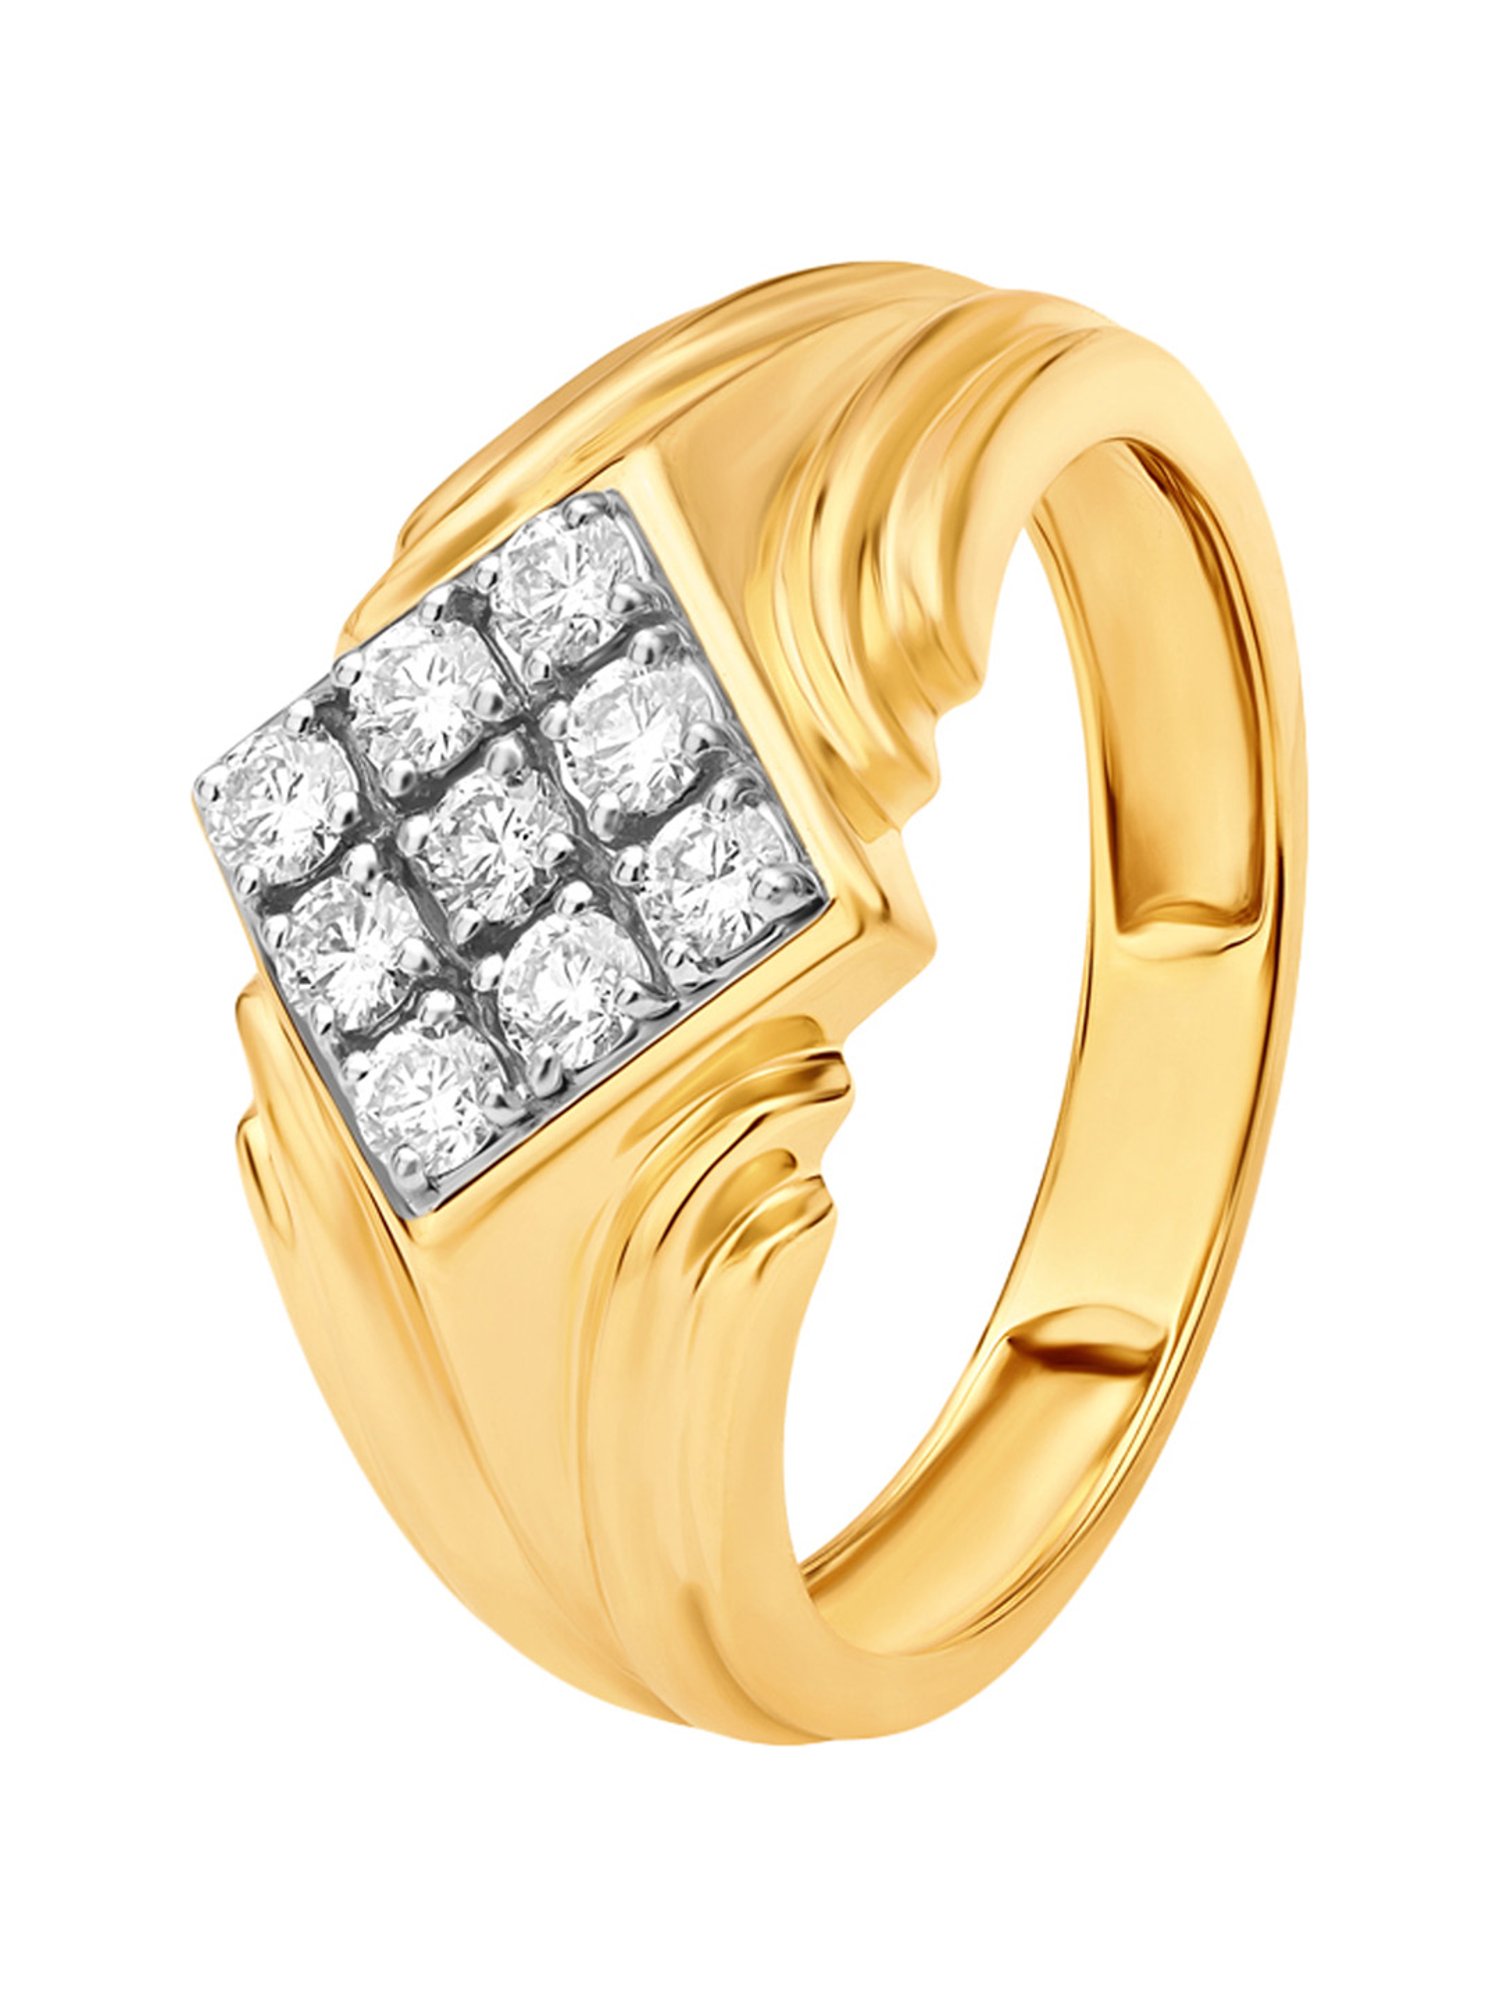 Diamond rings always... - CaratLane: A Tanishq Partnership | Facebook